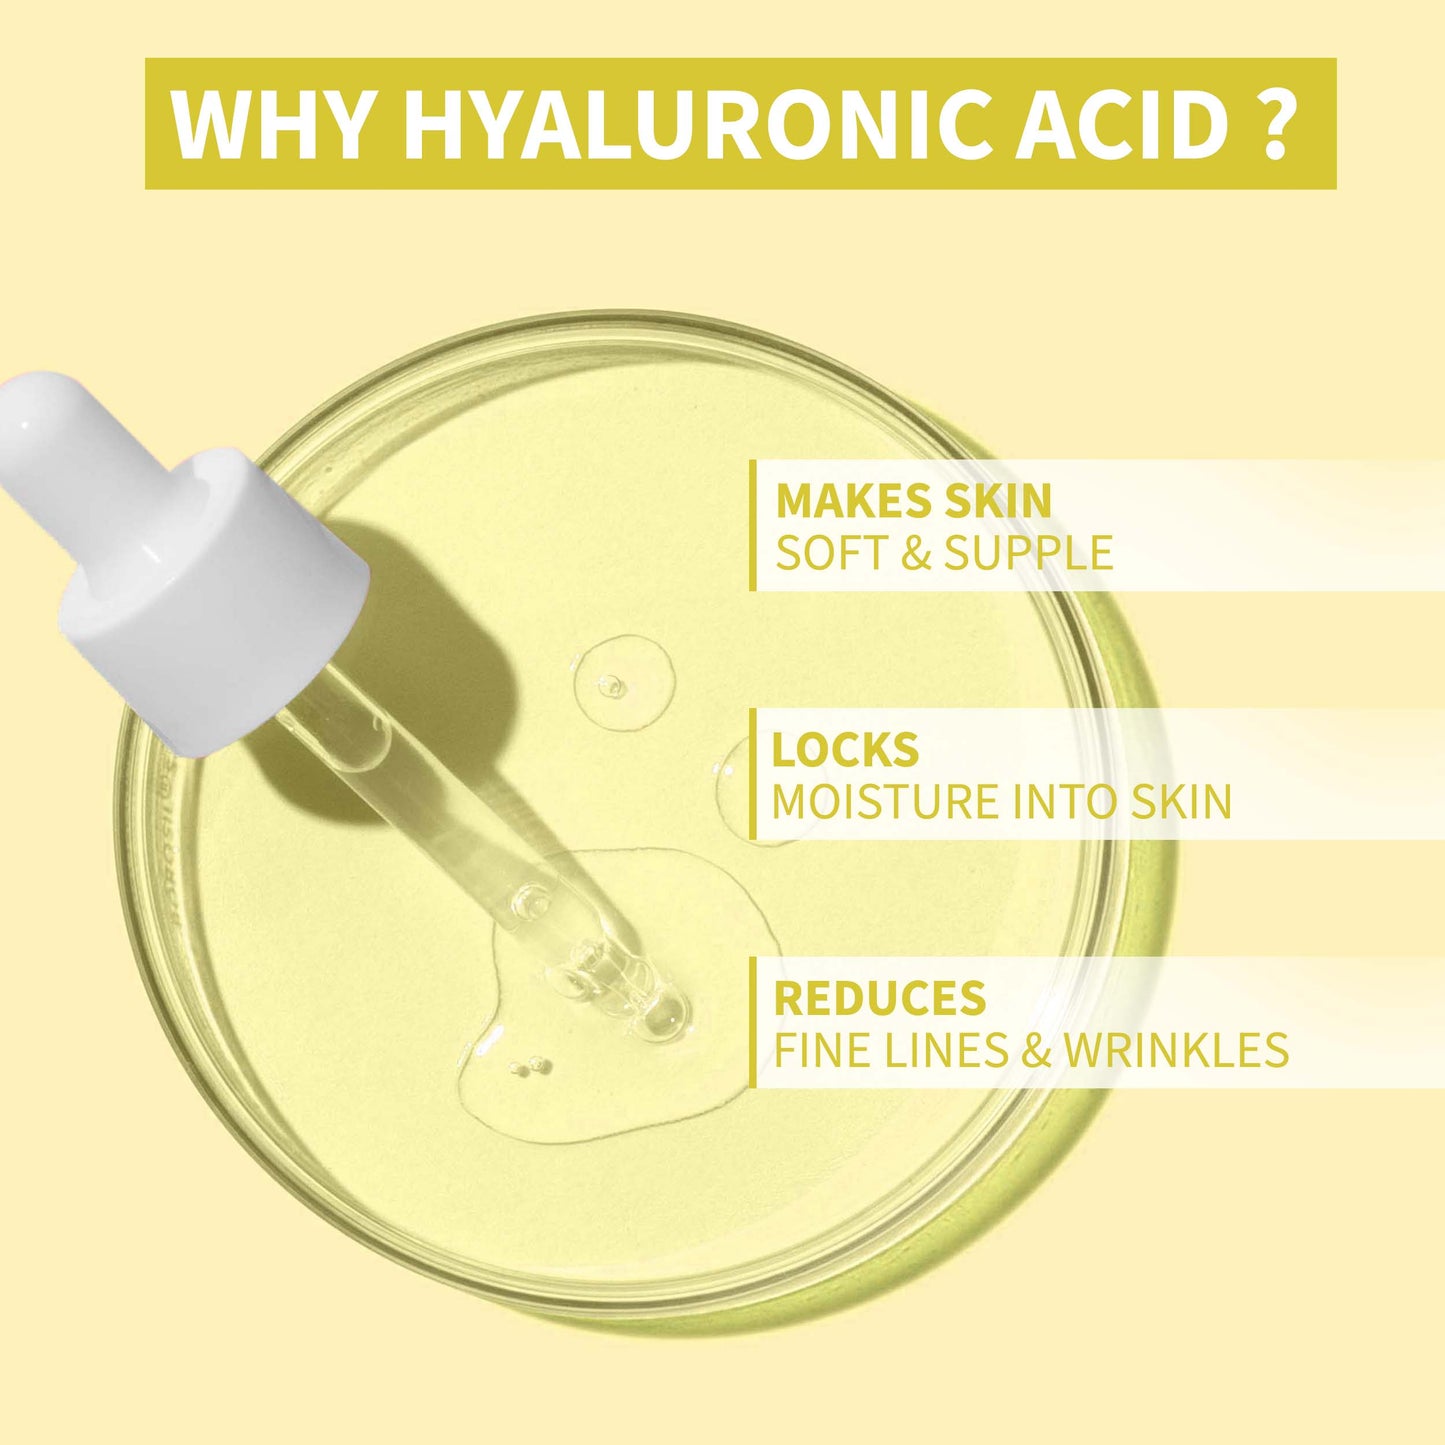 DermDoc Skin Plumping Face Serum with Vitamin C & Hyaluronic Acid (15 ml)